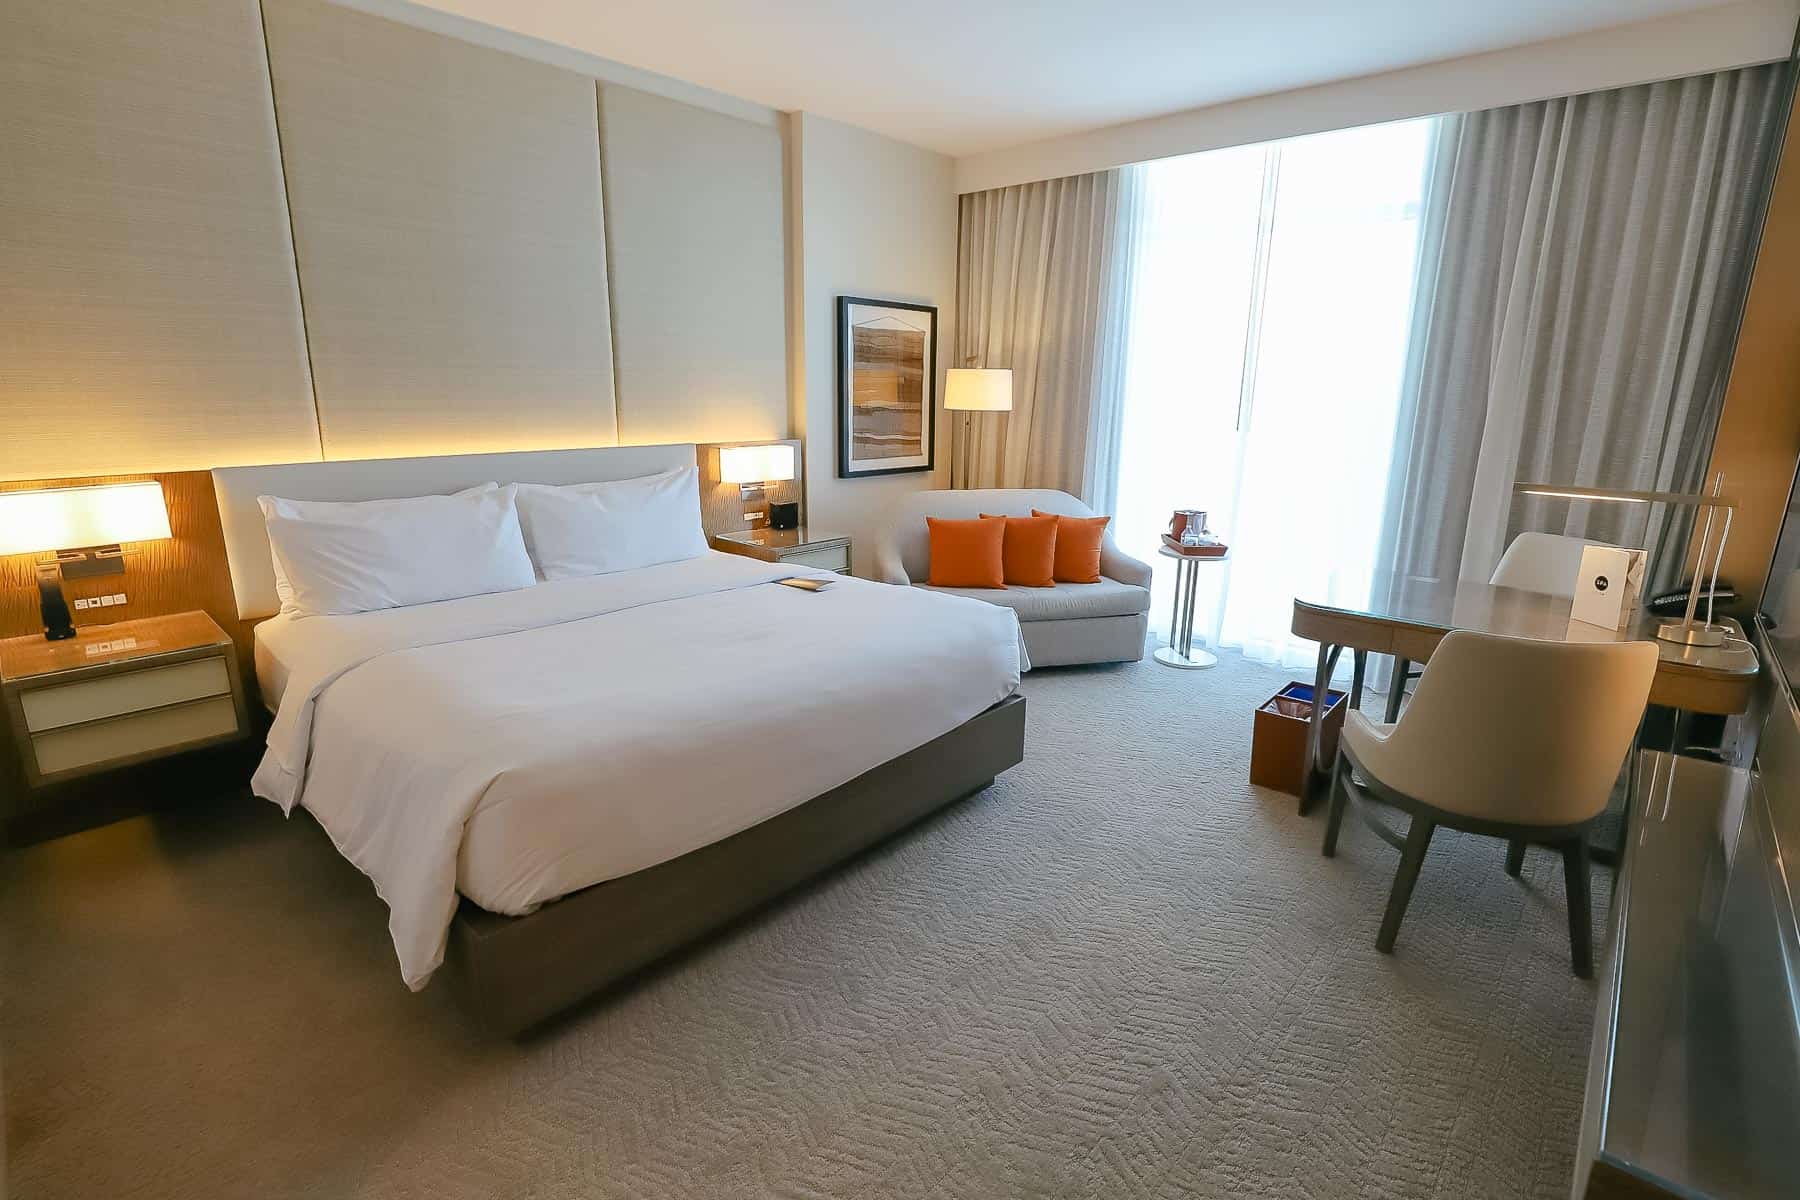 Luxury Marriott Hotel Room that's close to Disney. 